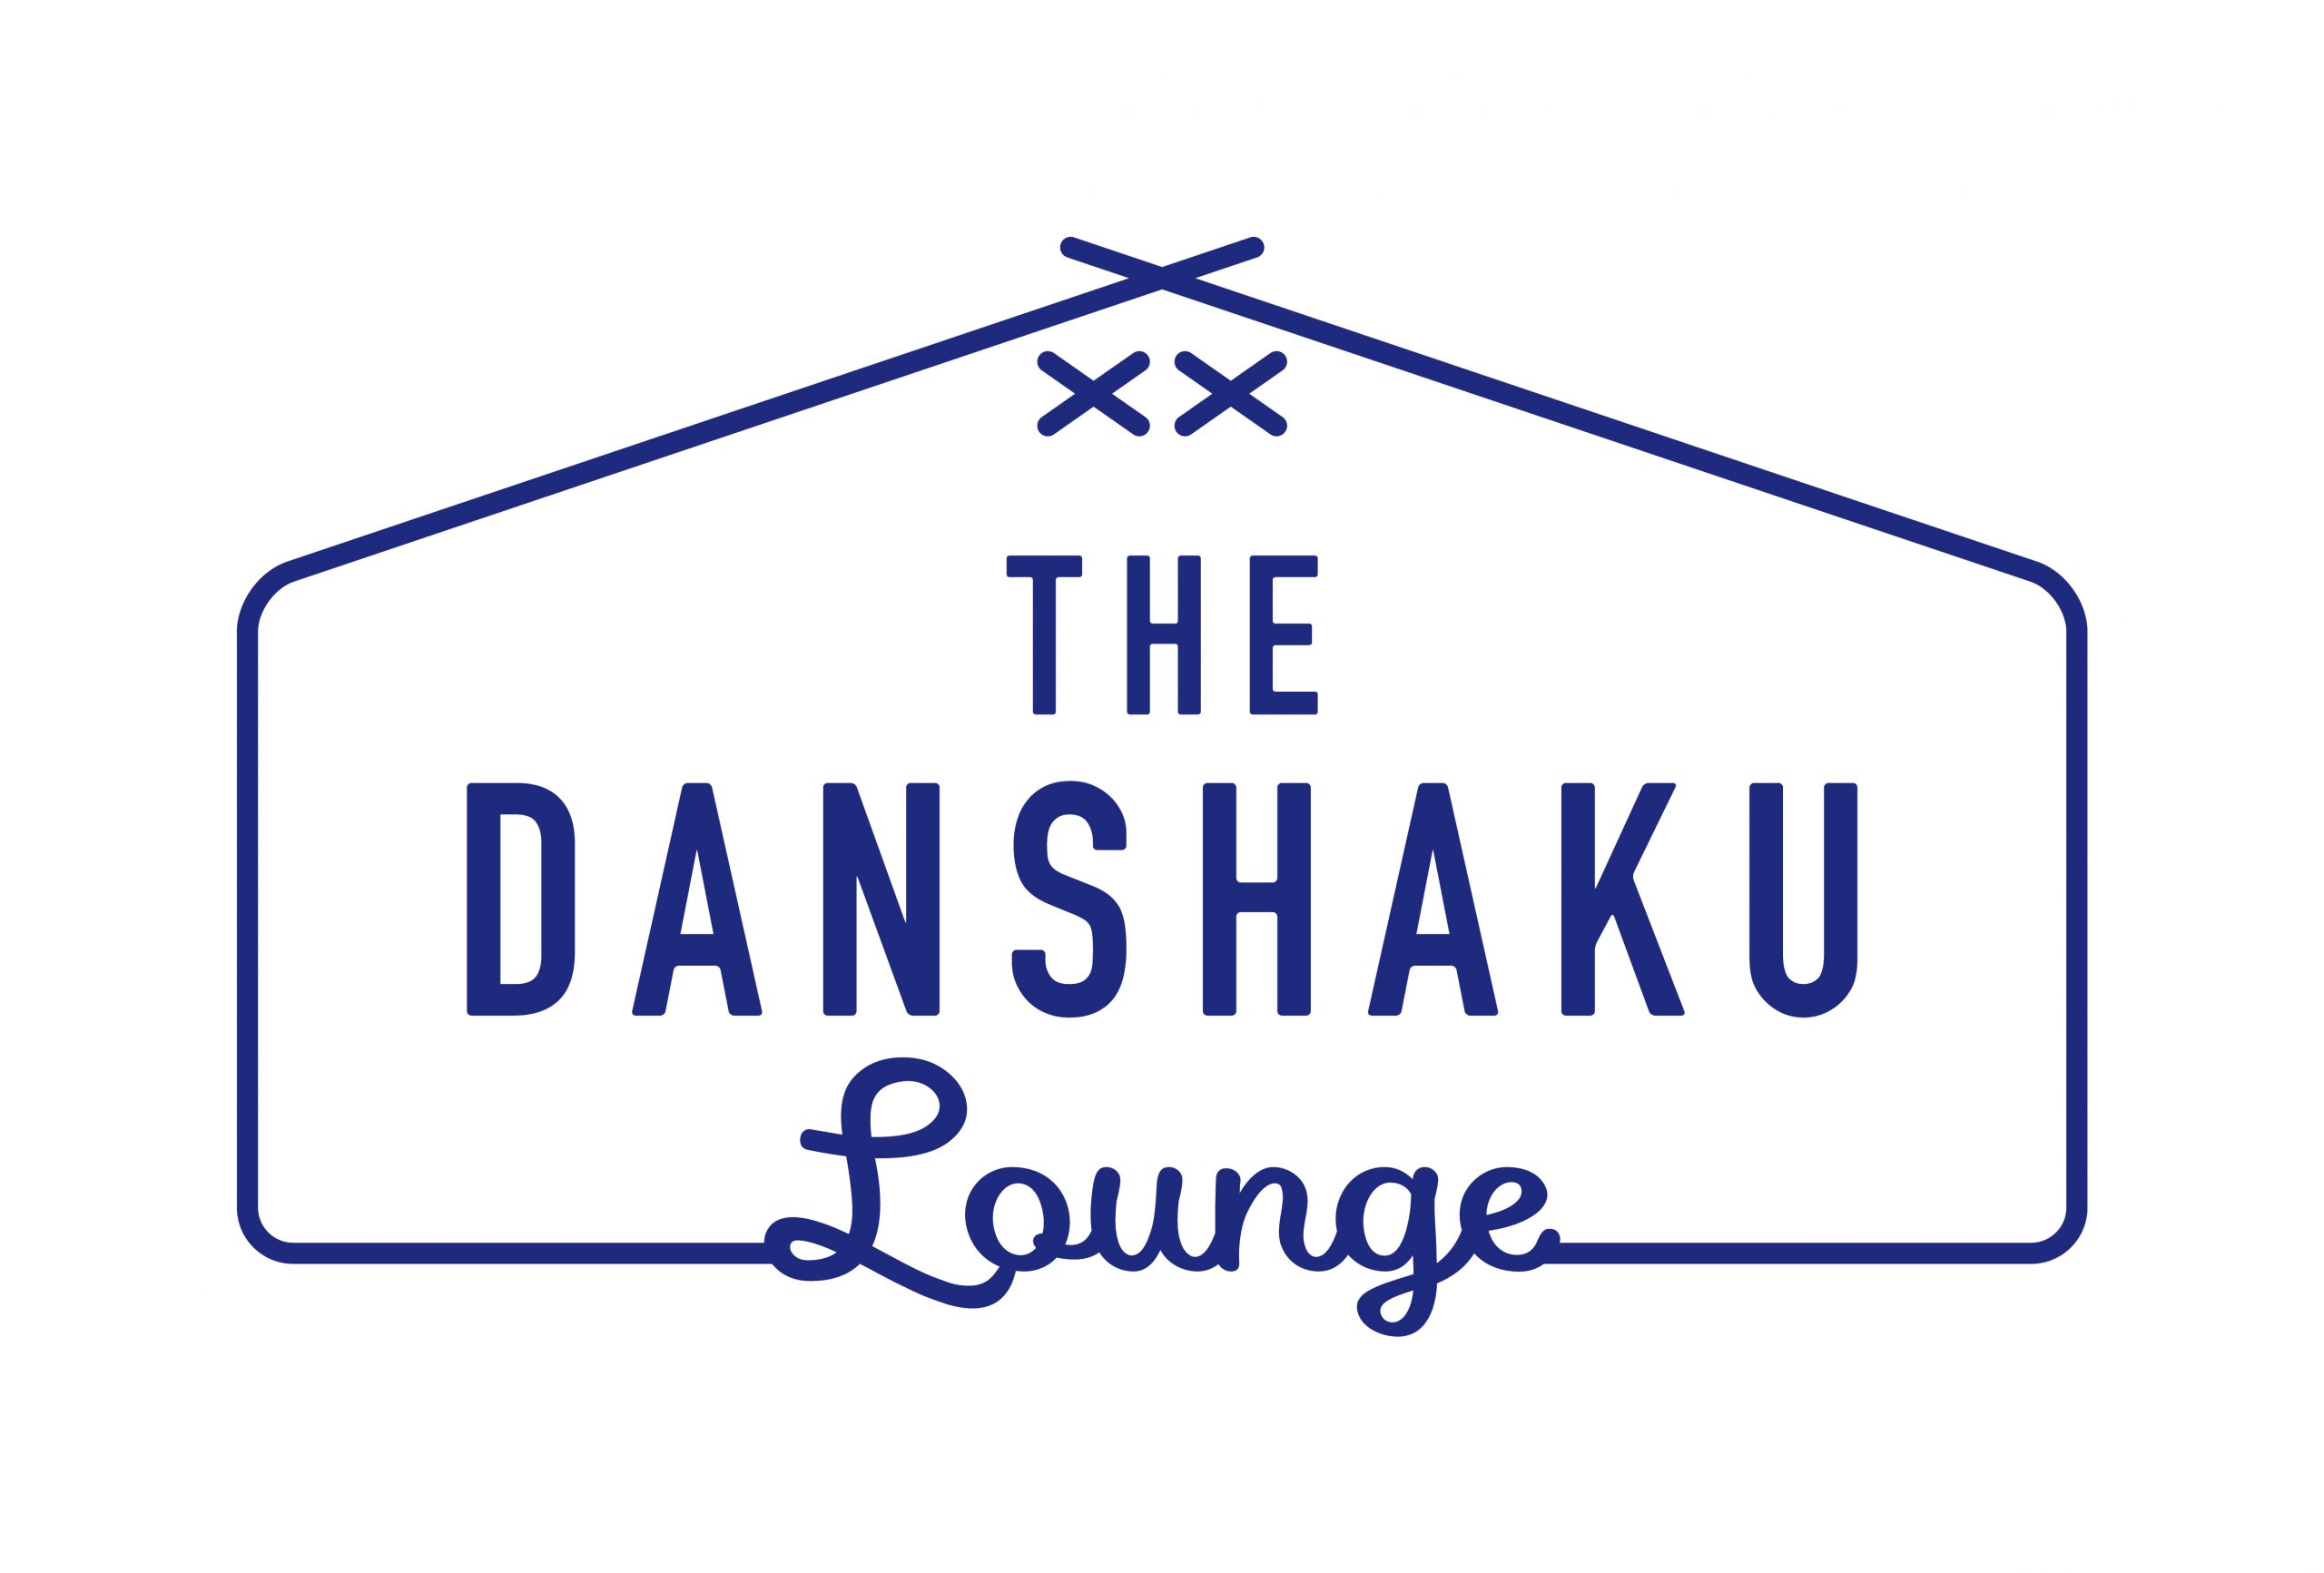 THE DANSHAKU LOUNGE